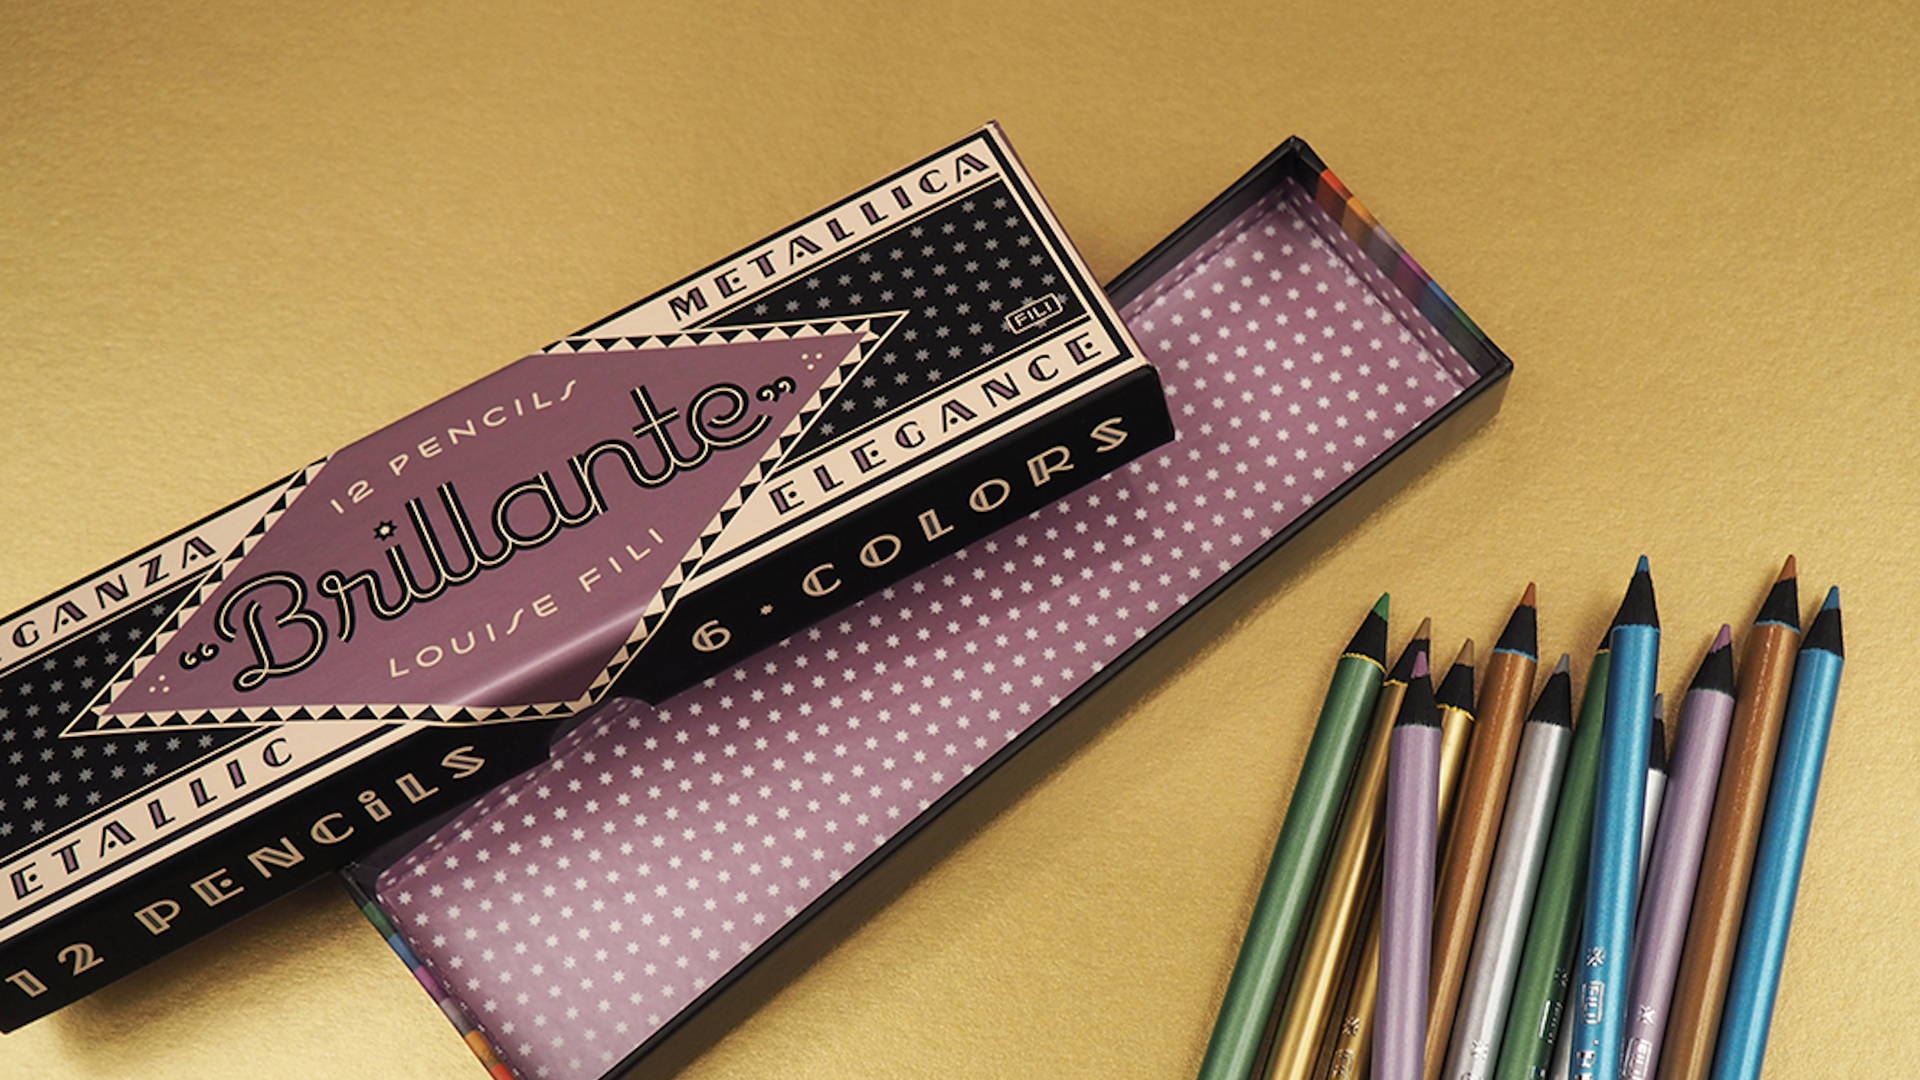 Vibrant Italian-Inspired Packaging for Louise Fili Brillante Pencils |  Dieline - Design, Branding & Packaging Inspiration